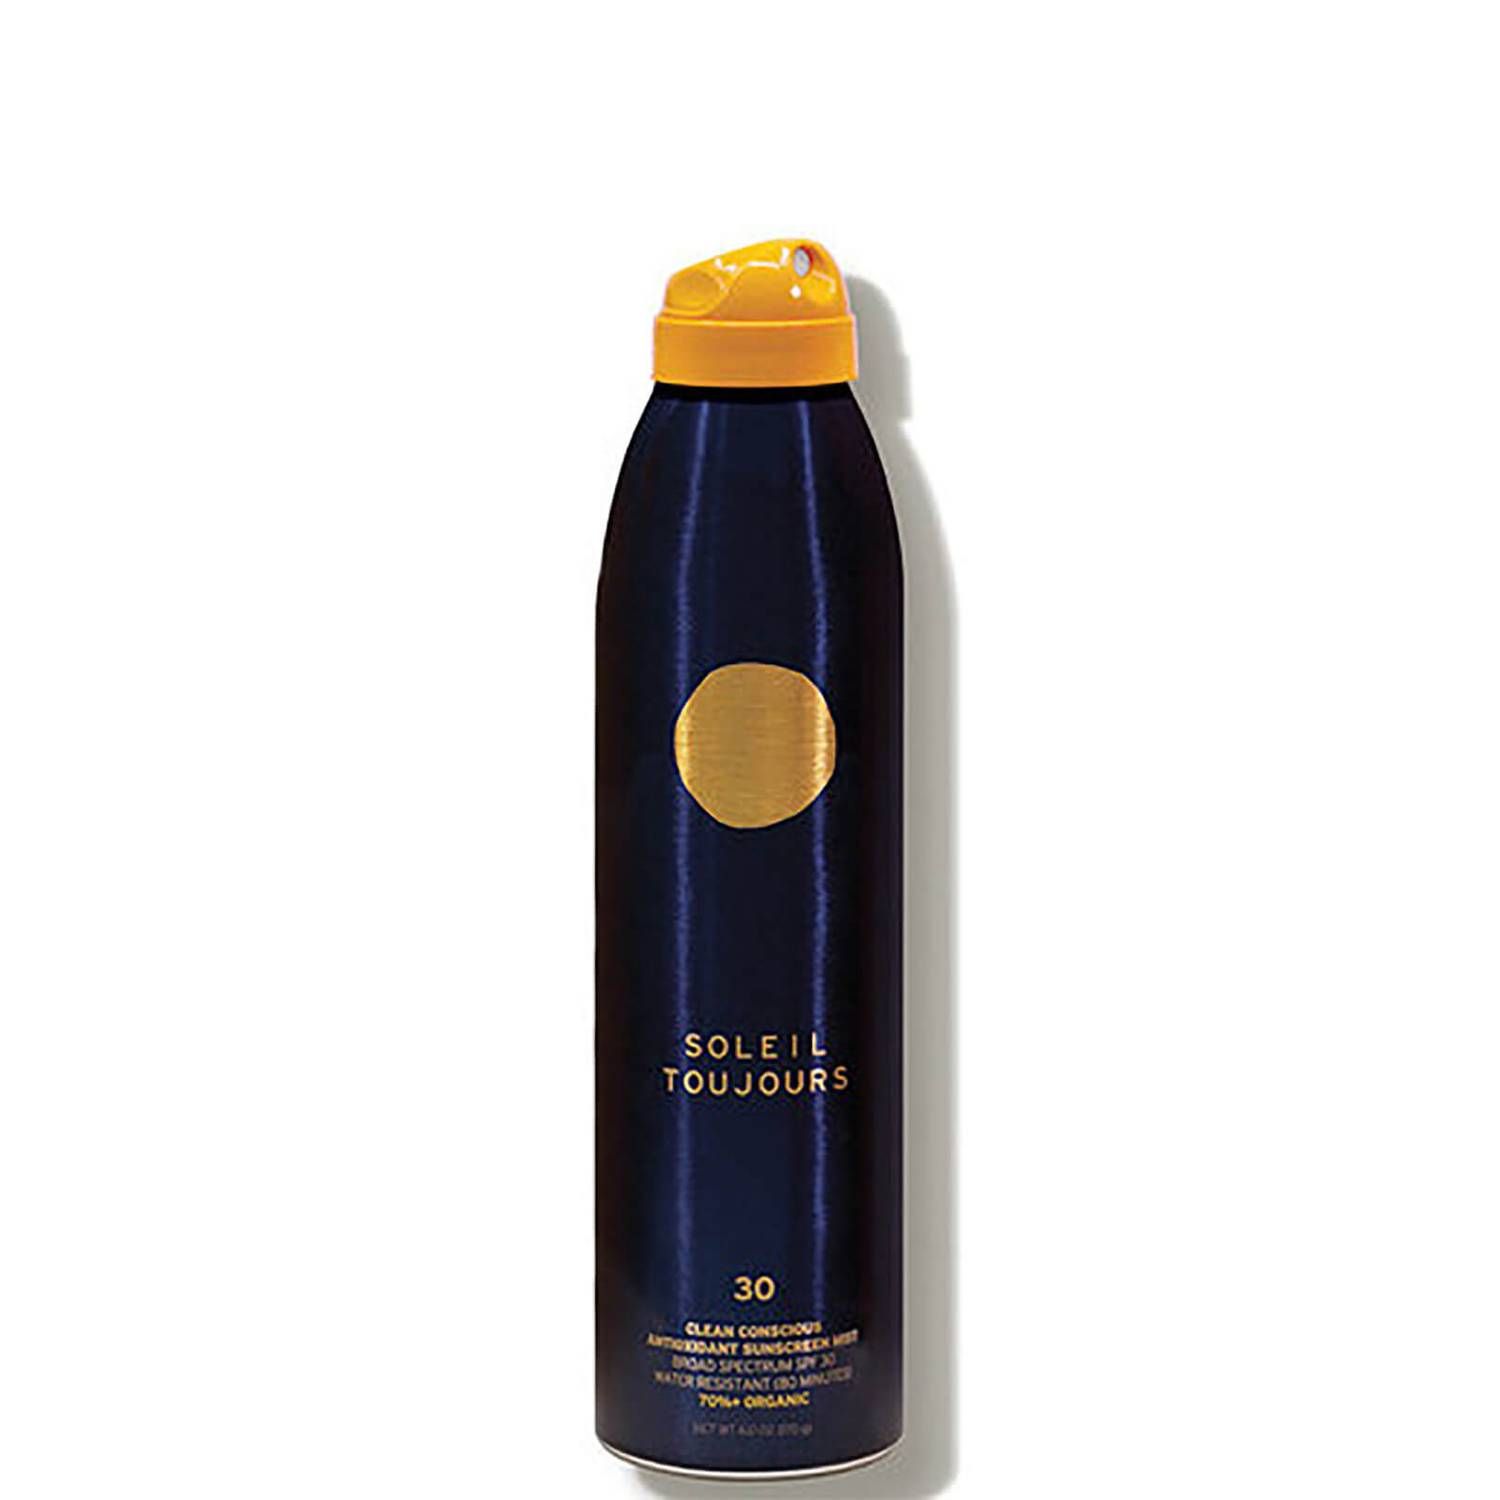 Soleil Toujours Clean Conscious Antioxidant Sunscreen Mist SPF 30 6 fl. oz. | Dermstore (US)